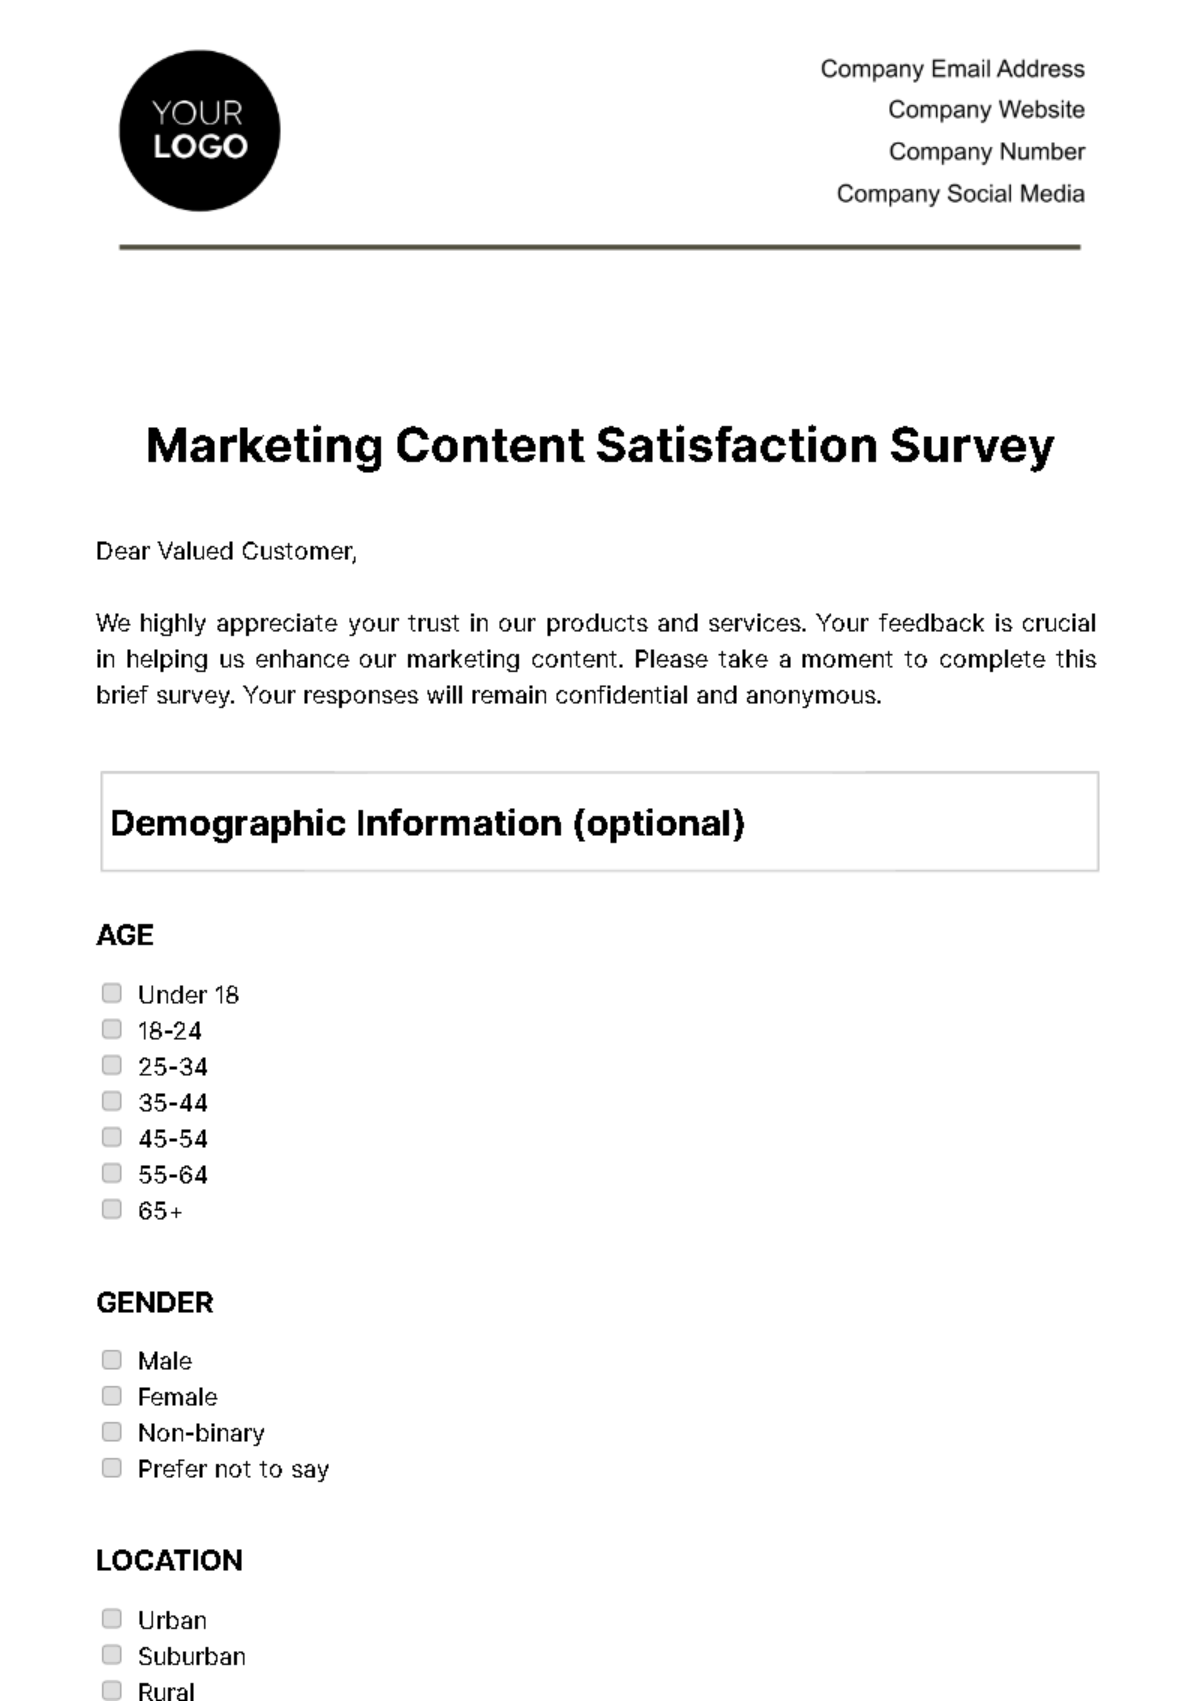 Marketing Content Satisfaction Survey Template